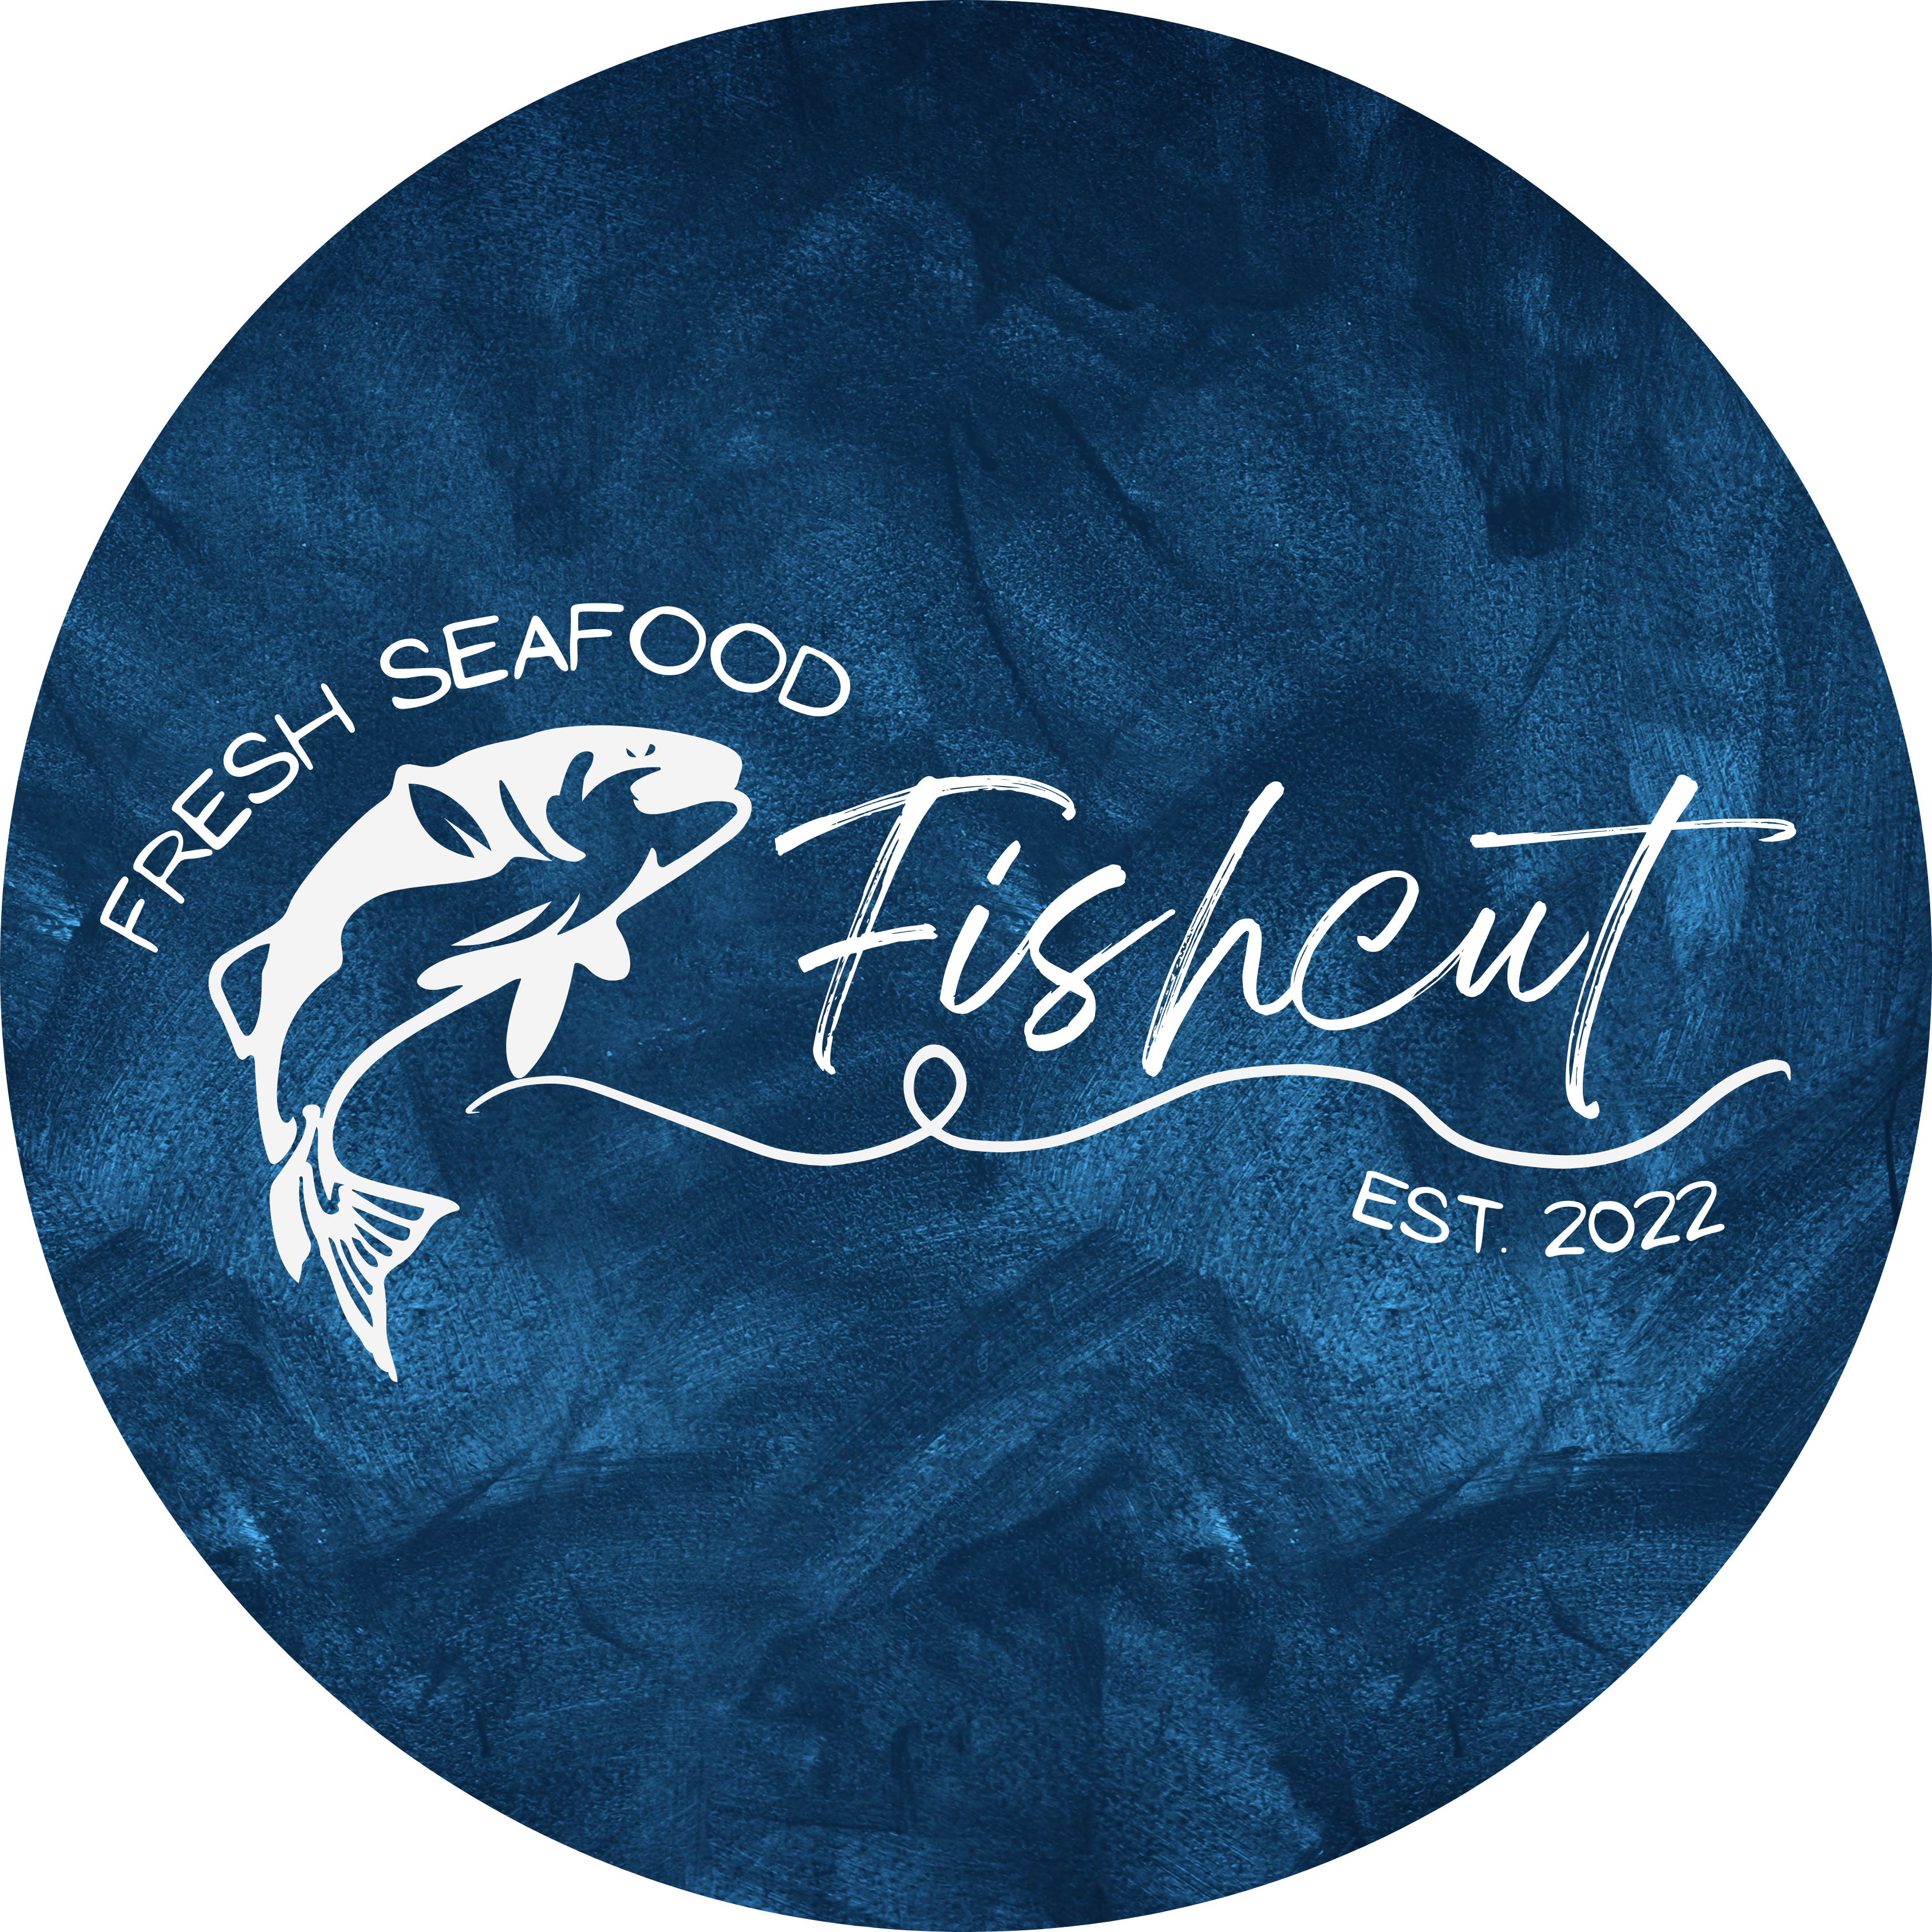 Fishcut Seafood